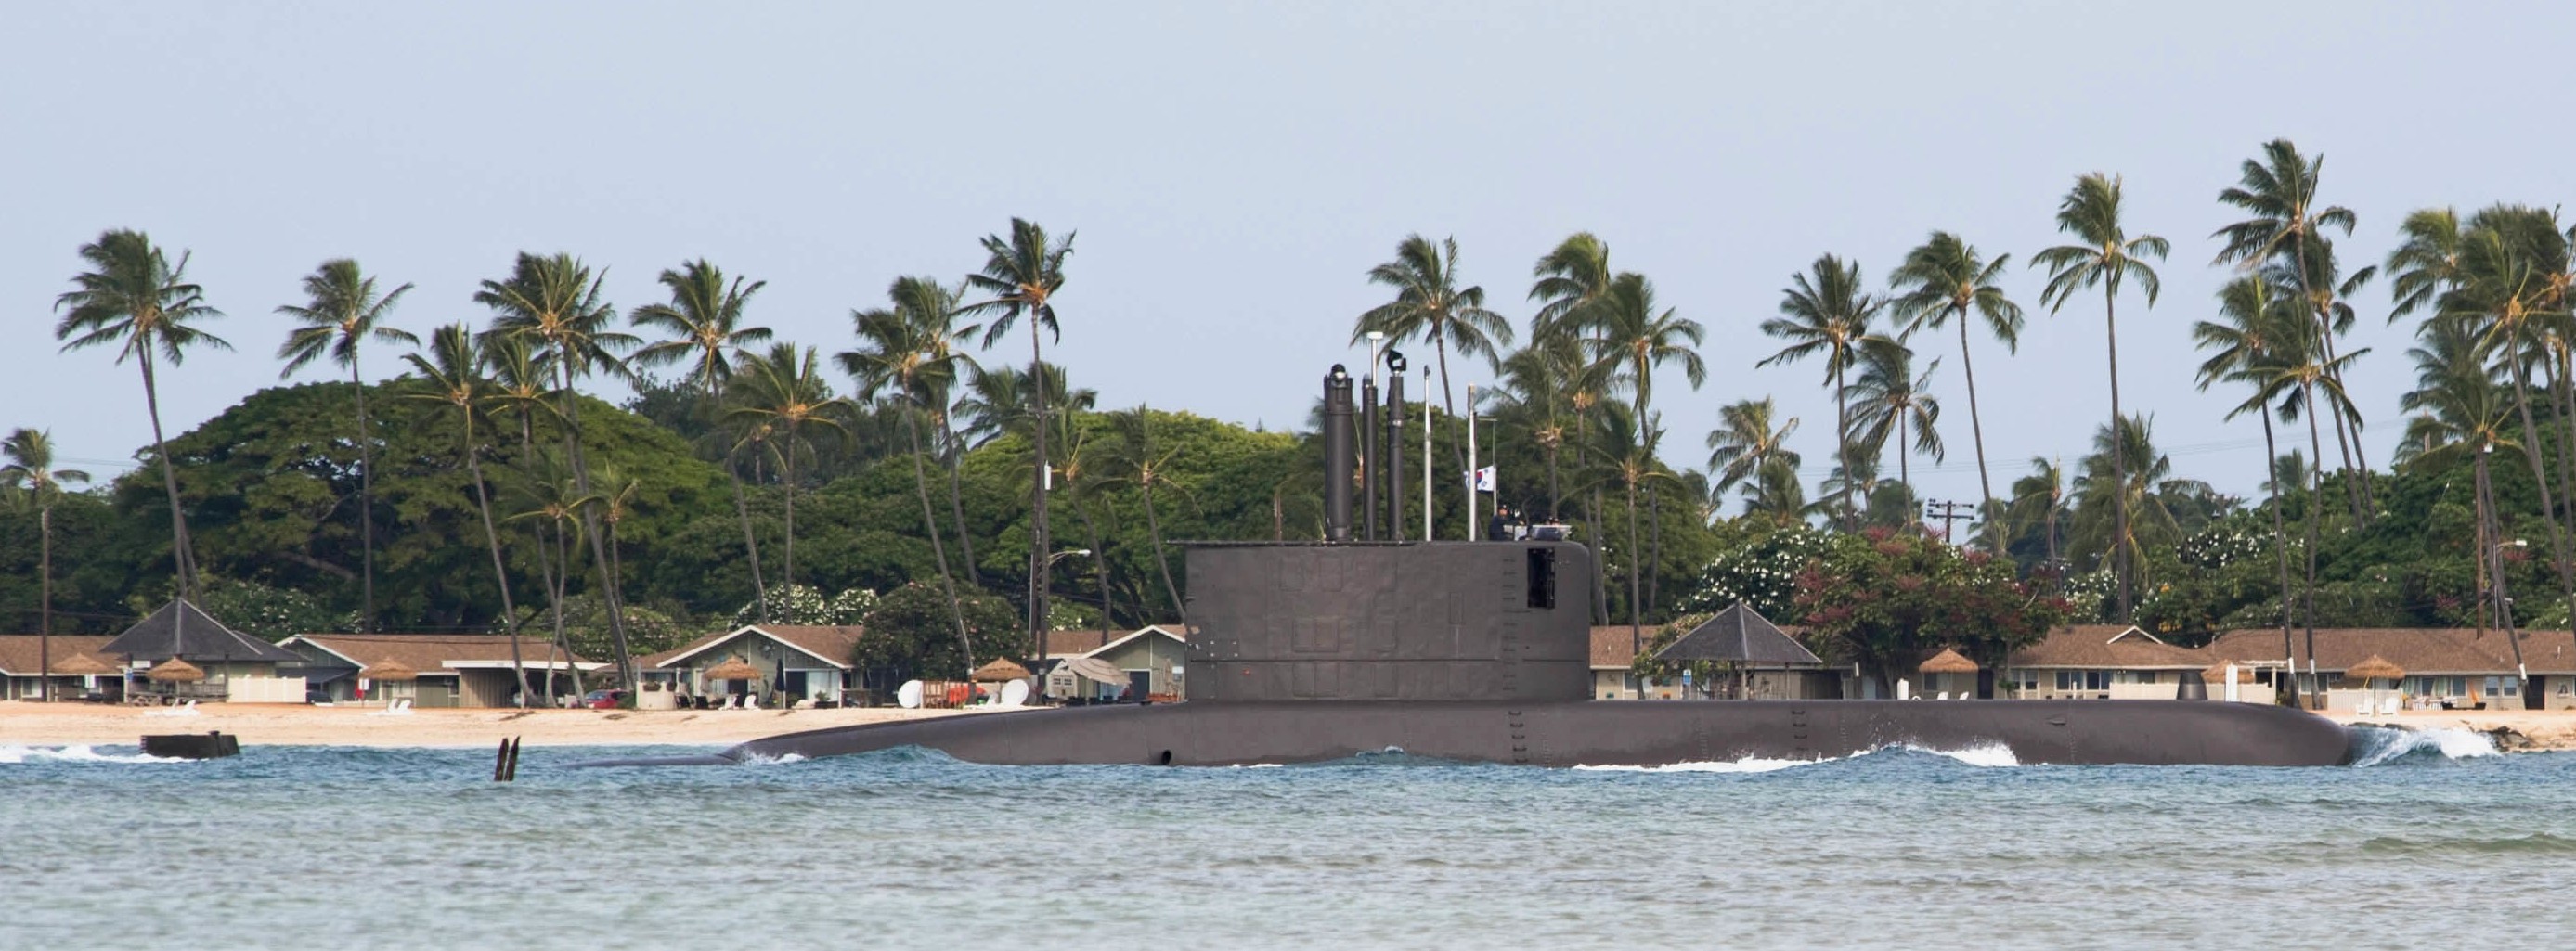 ss-065 roks park wi jang bogo class kss-i type 209-1200 attack submarine republic of korea navy rokn 533mm sut torpedo ugm-84 harpoon ssm 04